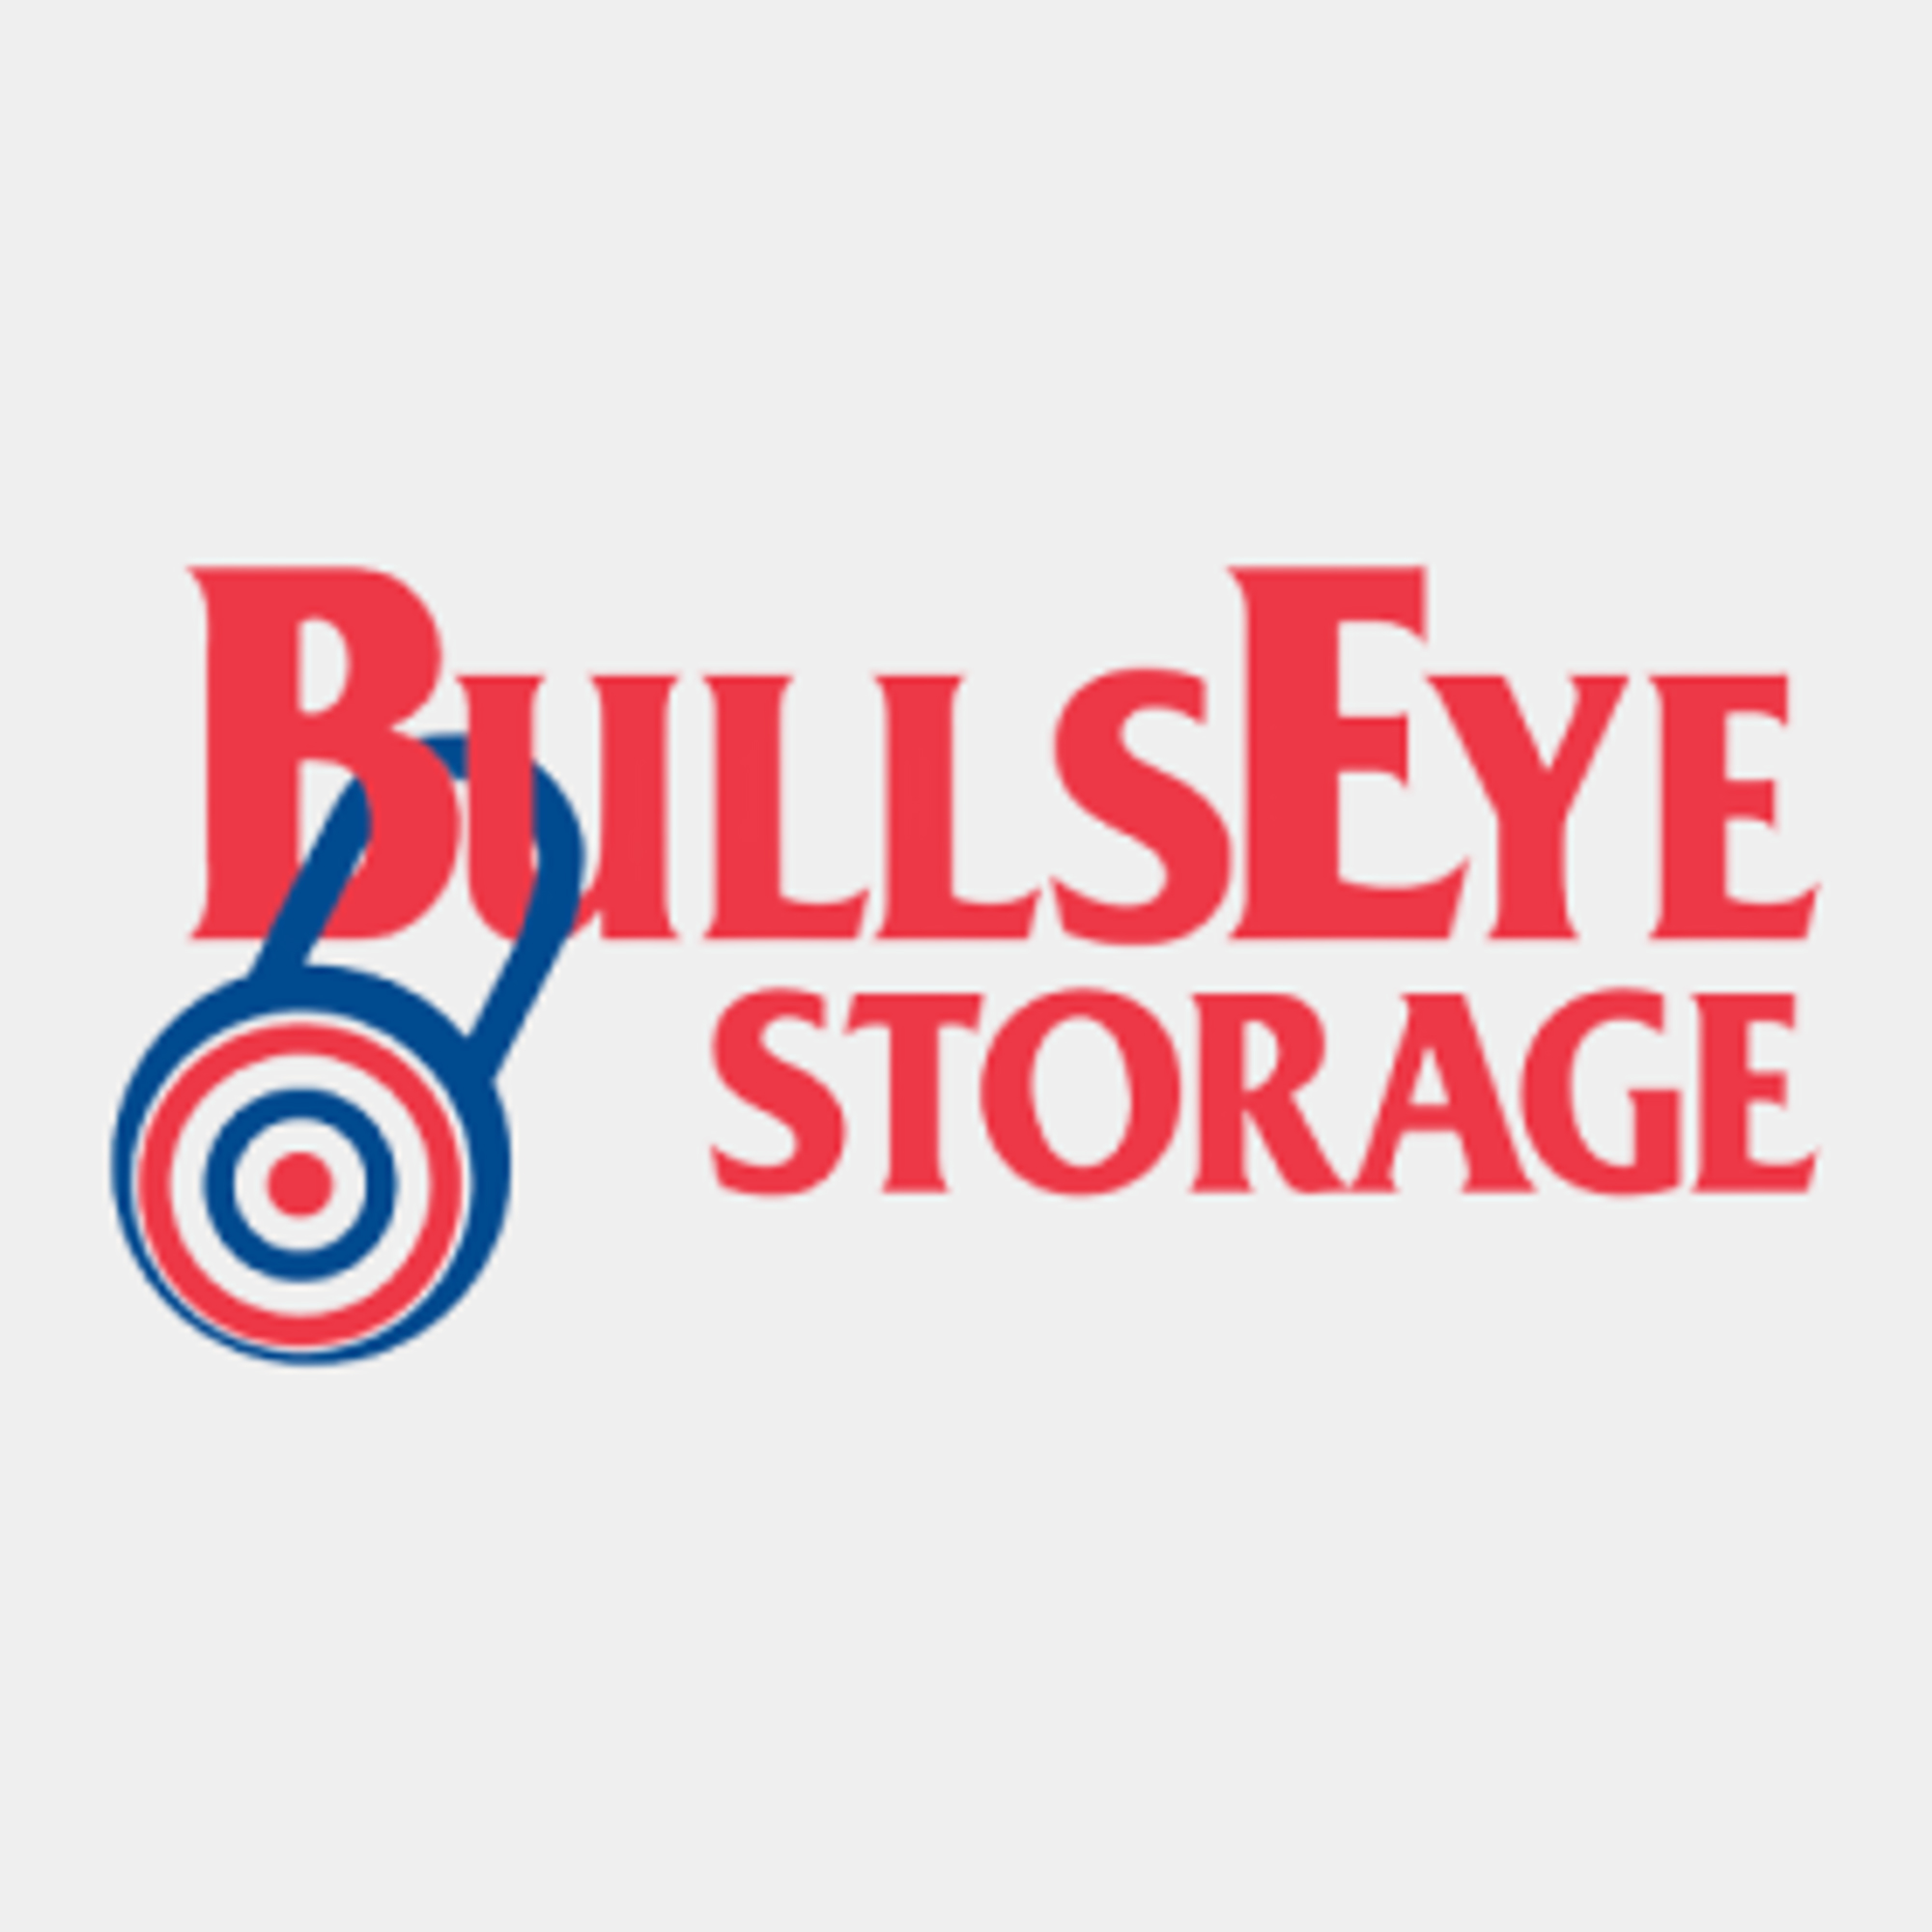 BullsEye Storage